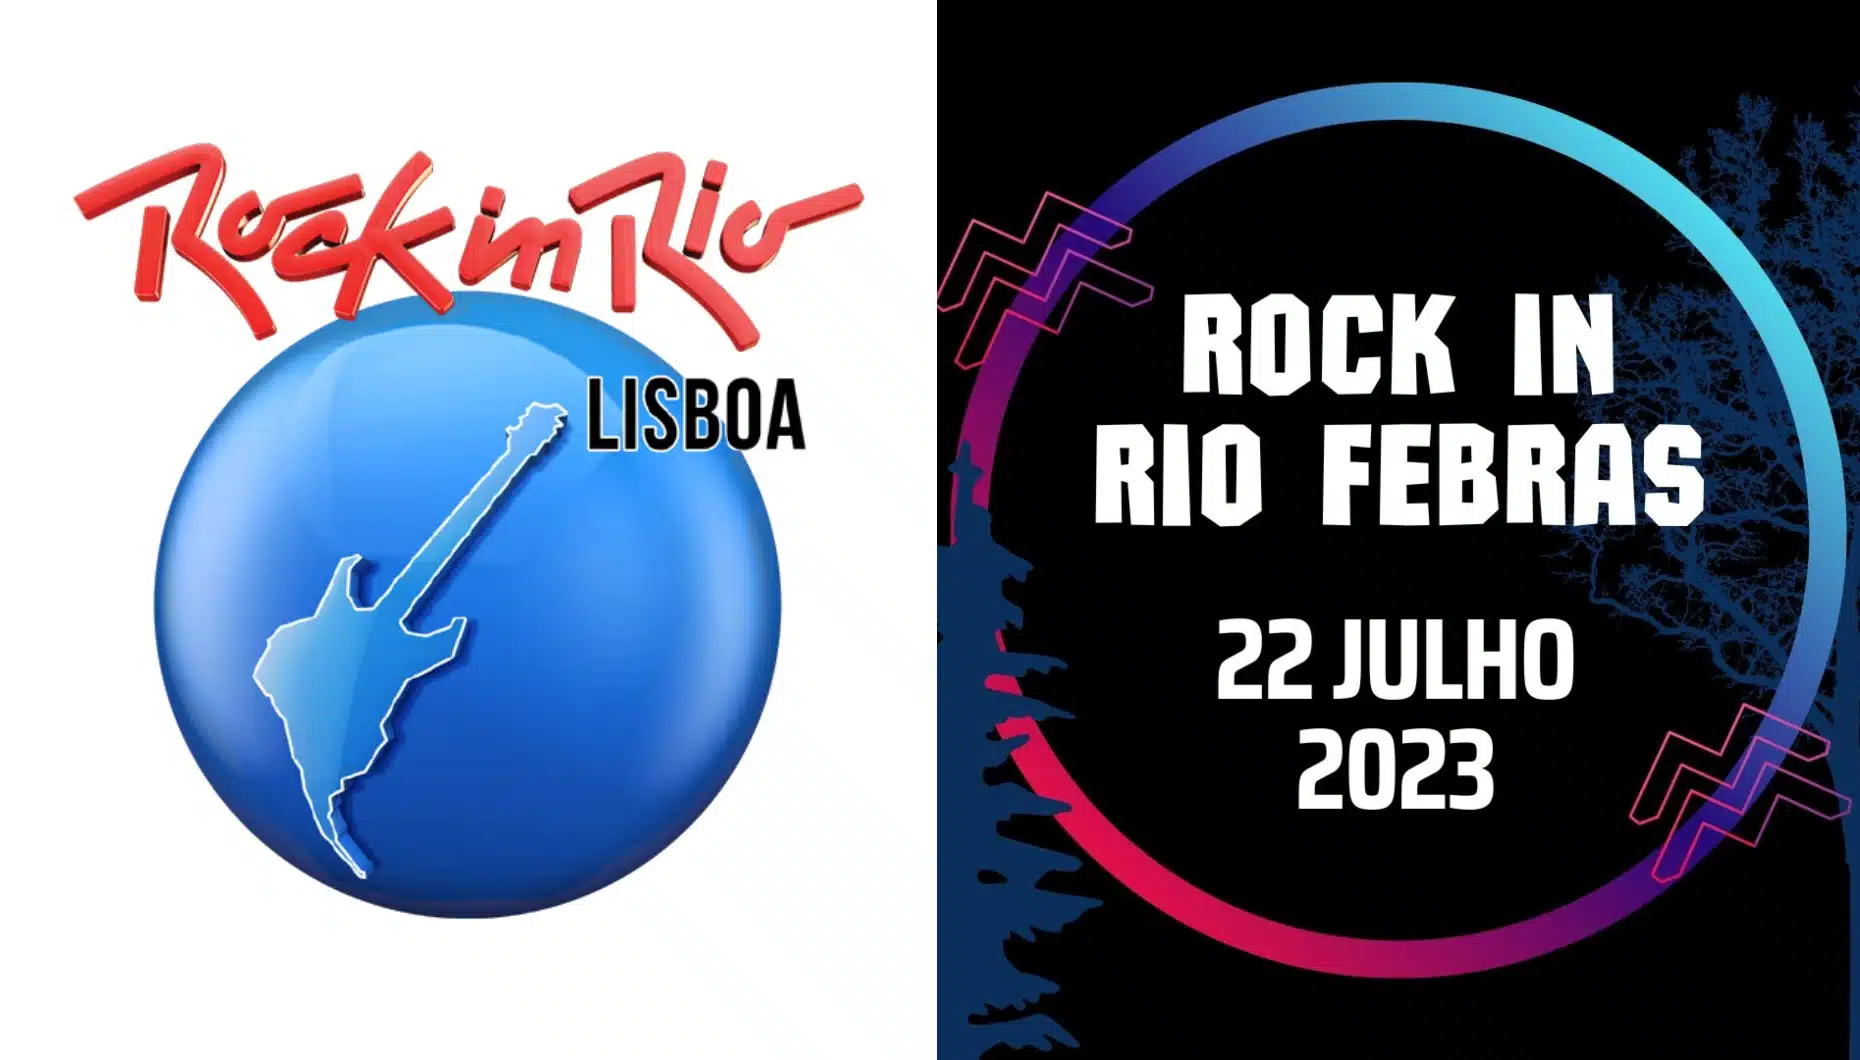 Rock In Rio Lisboa- Rock In Rio Febras